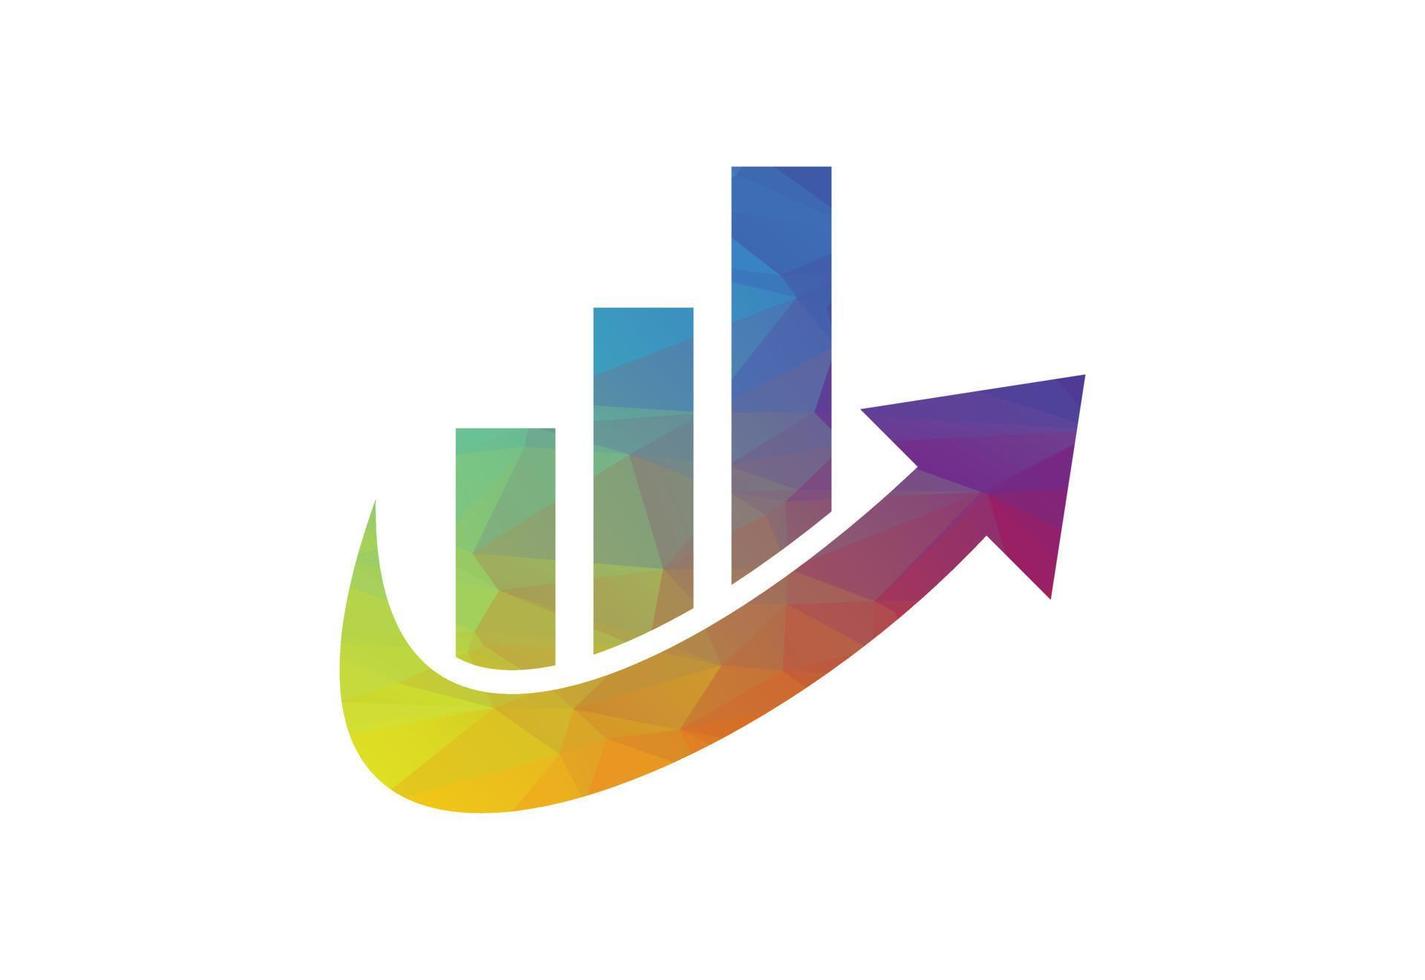 Low Poly and Financial logo design with creative arrow, Vector design concept